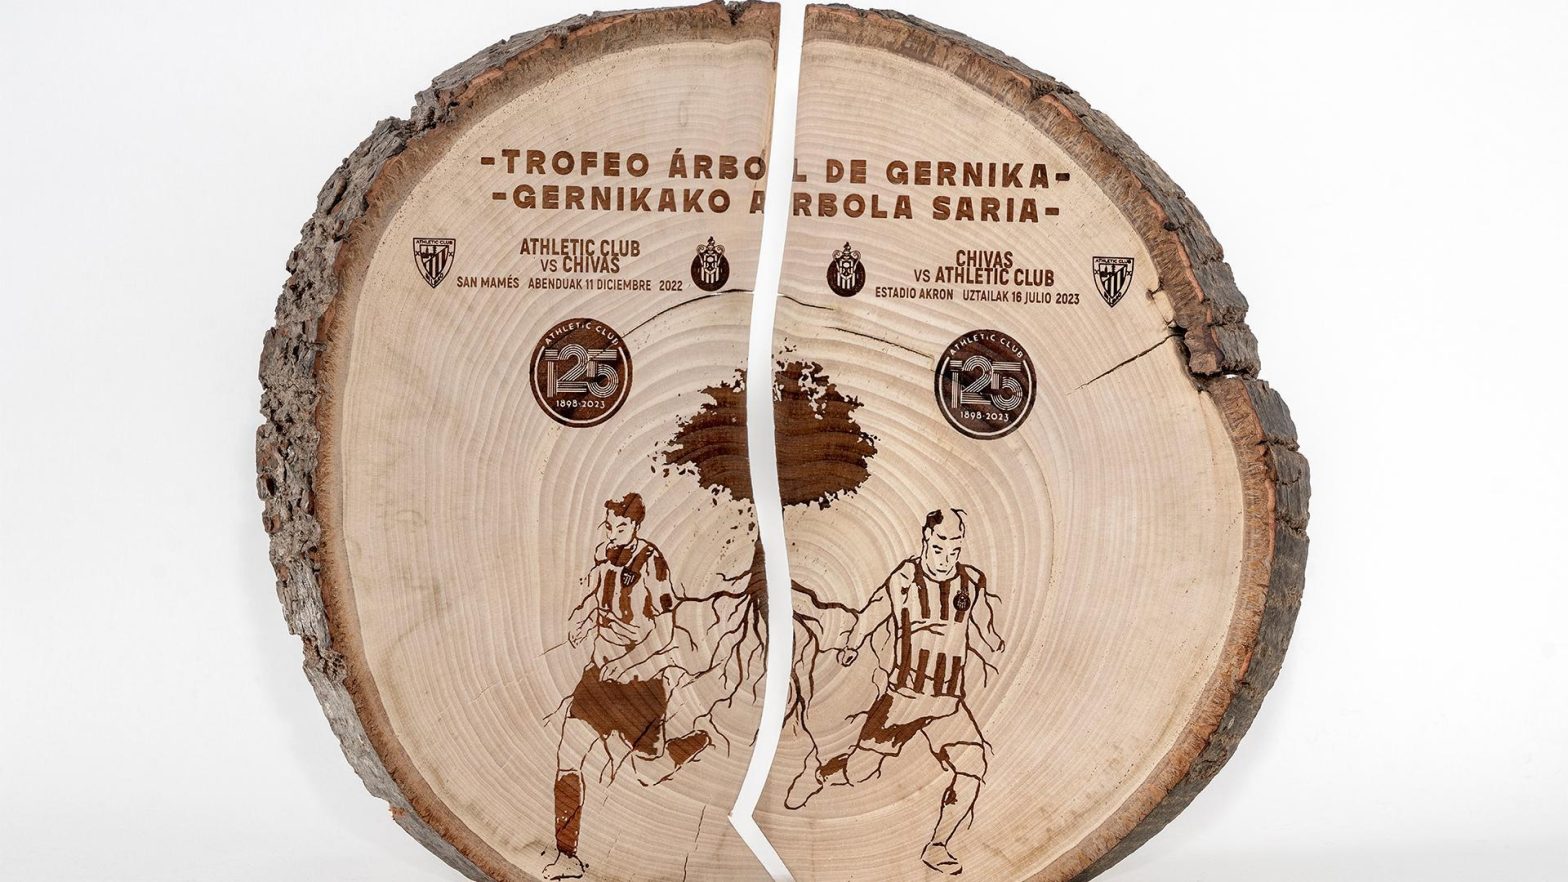 Chivas vs Athletic Club Live transmission of the Tree of Gernika Trophy